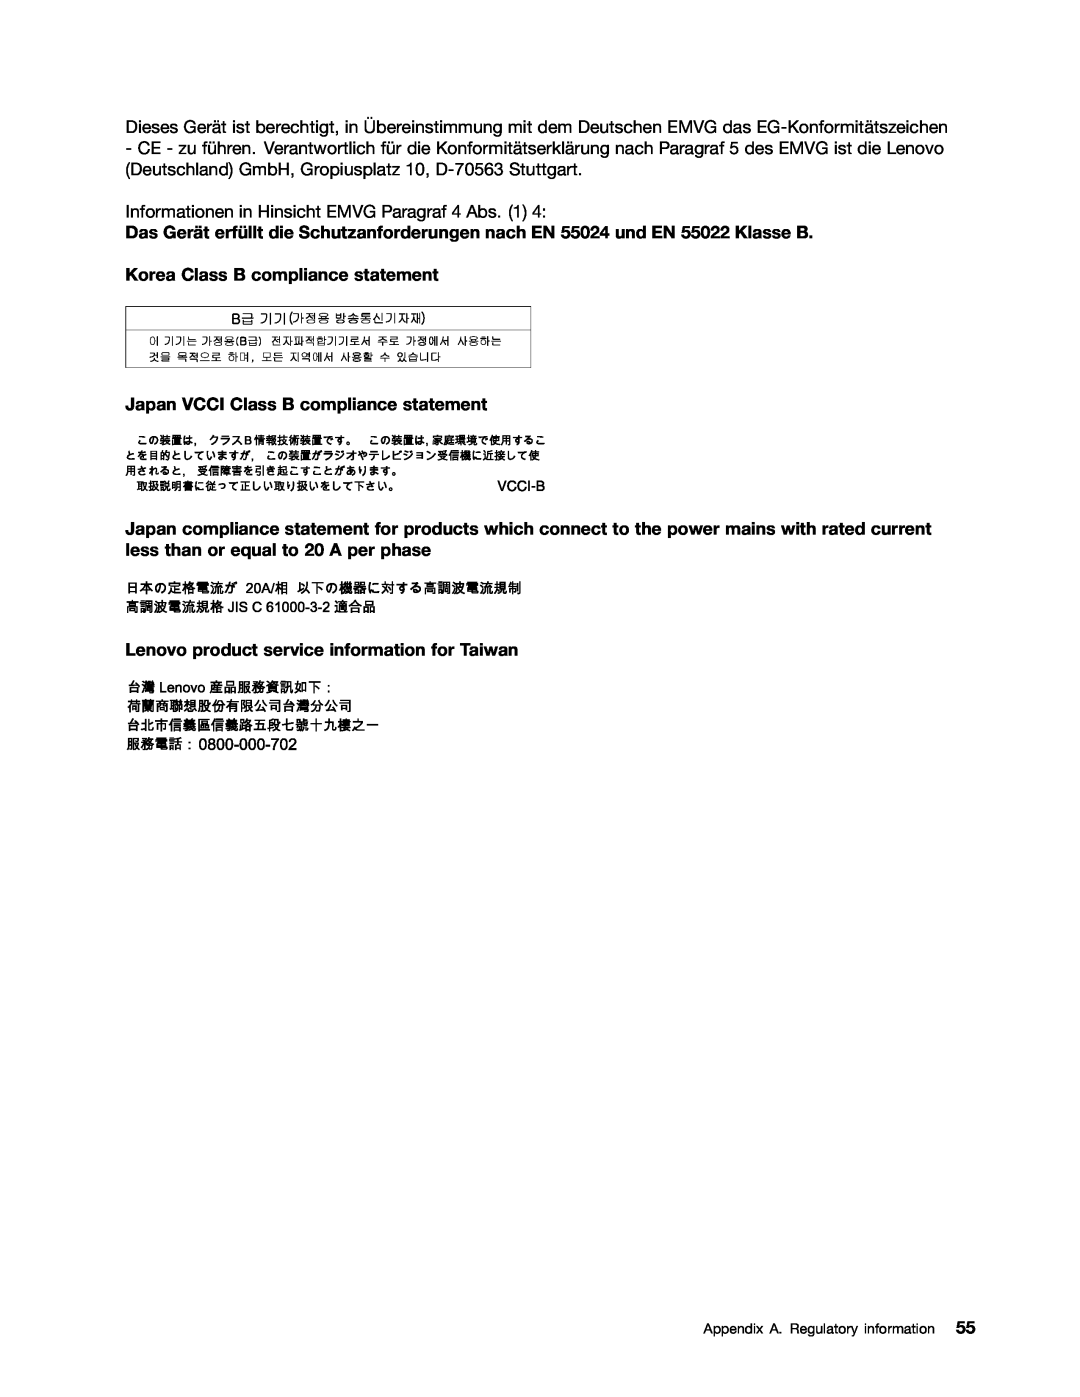 Lenovo 59366616, B590, B490 manual Korea Class B compliance statement, Japan VCCI Class B compliance statement 